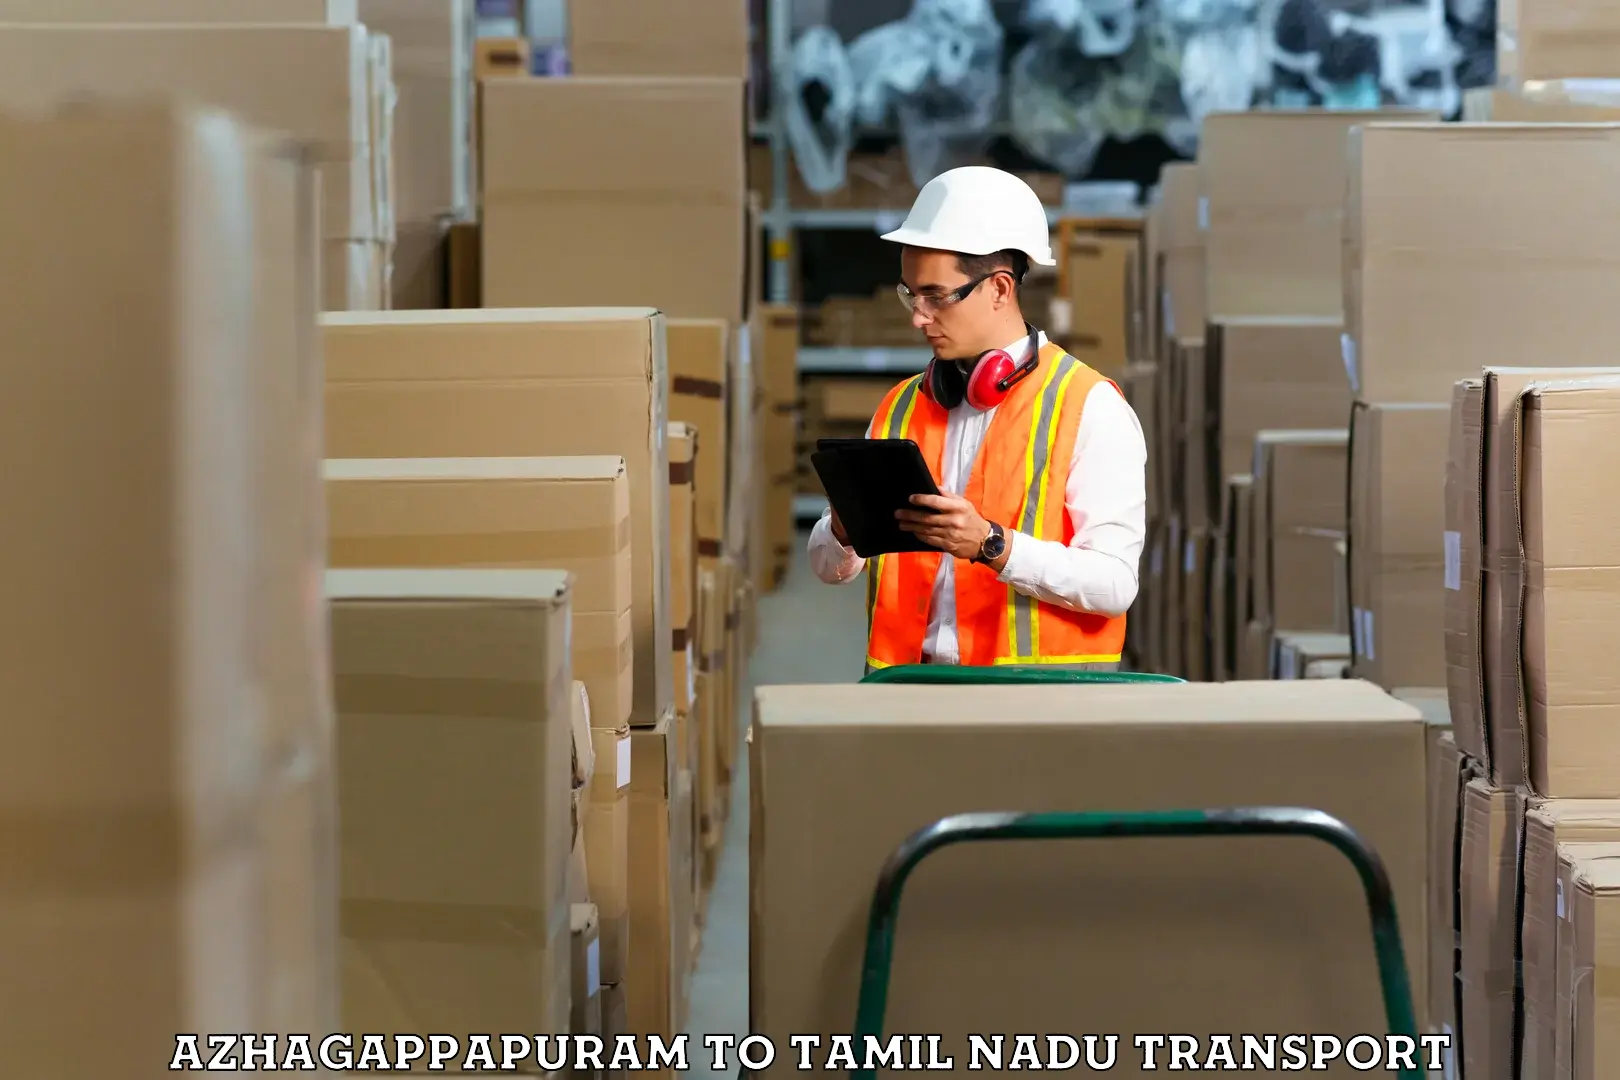 Truck transport companies in India Azhagappapuram to Thisayanvilai